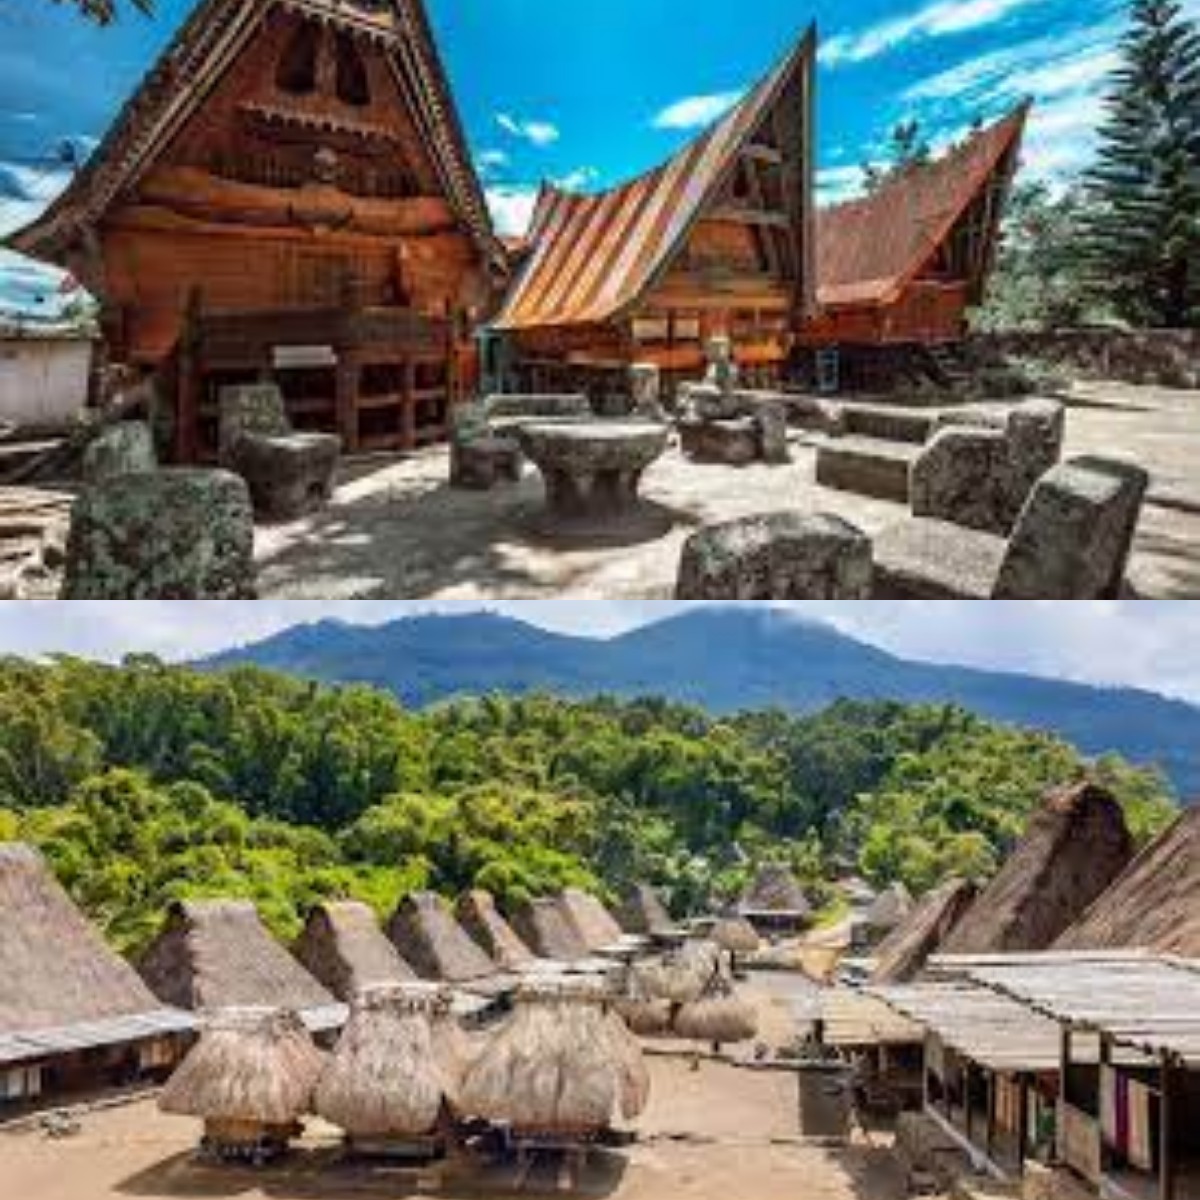 Mengenal 6 Desa Wisata Megalit yang Paling Terkenal di Indonesia, Salah Satunya Sudah di Akui UNESCO